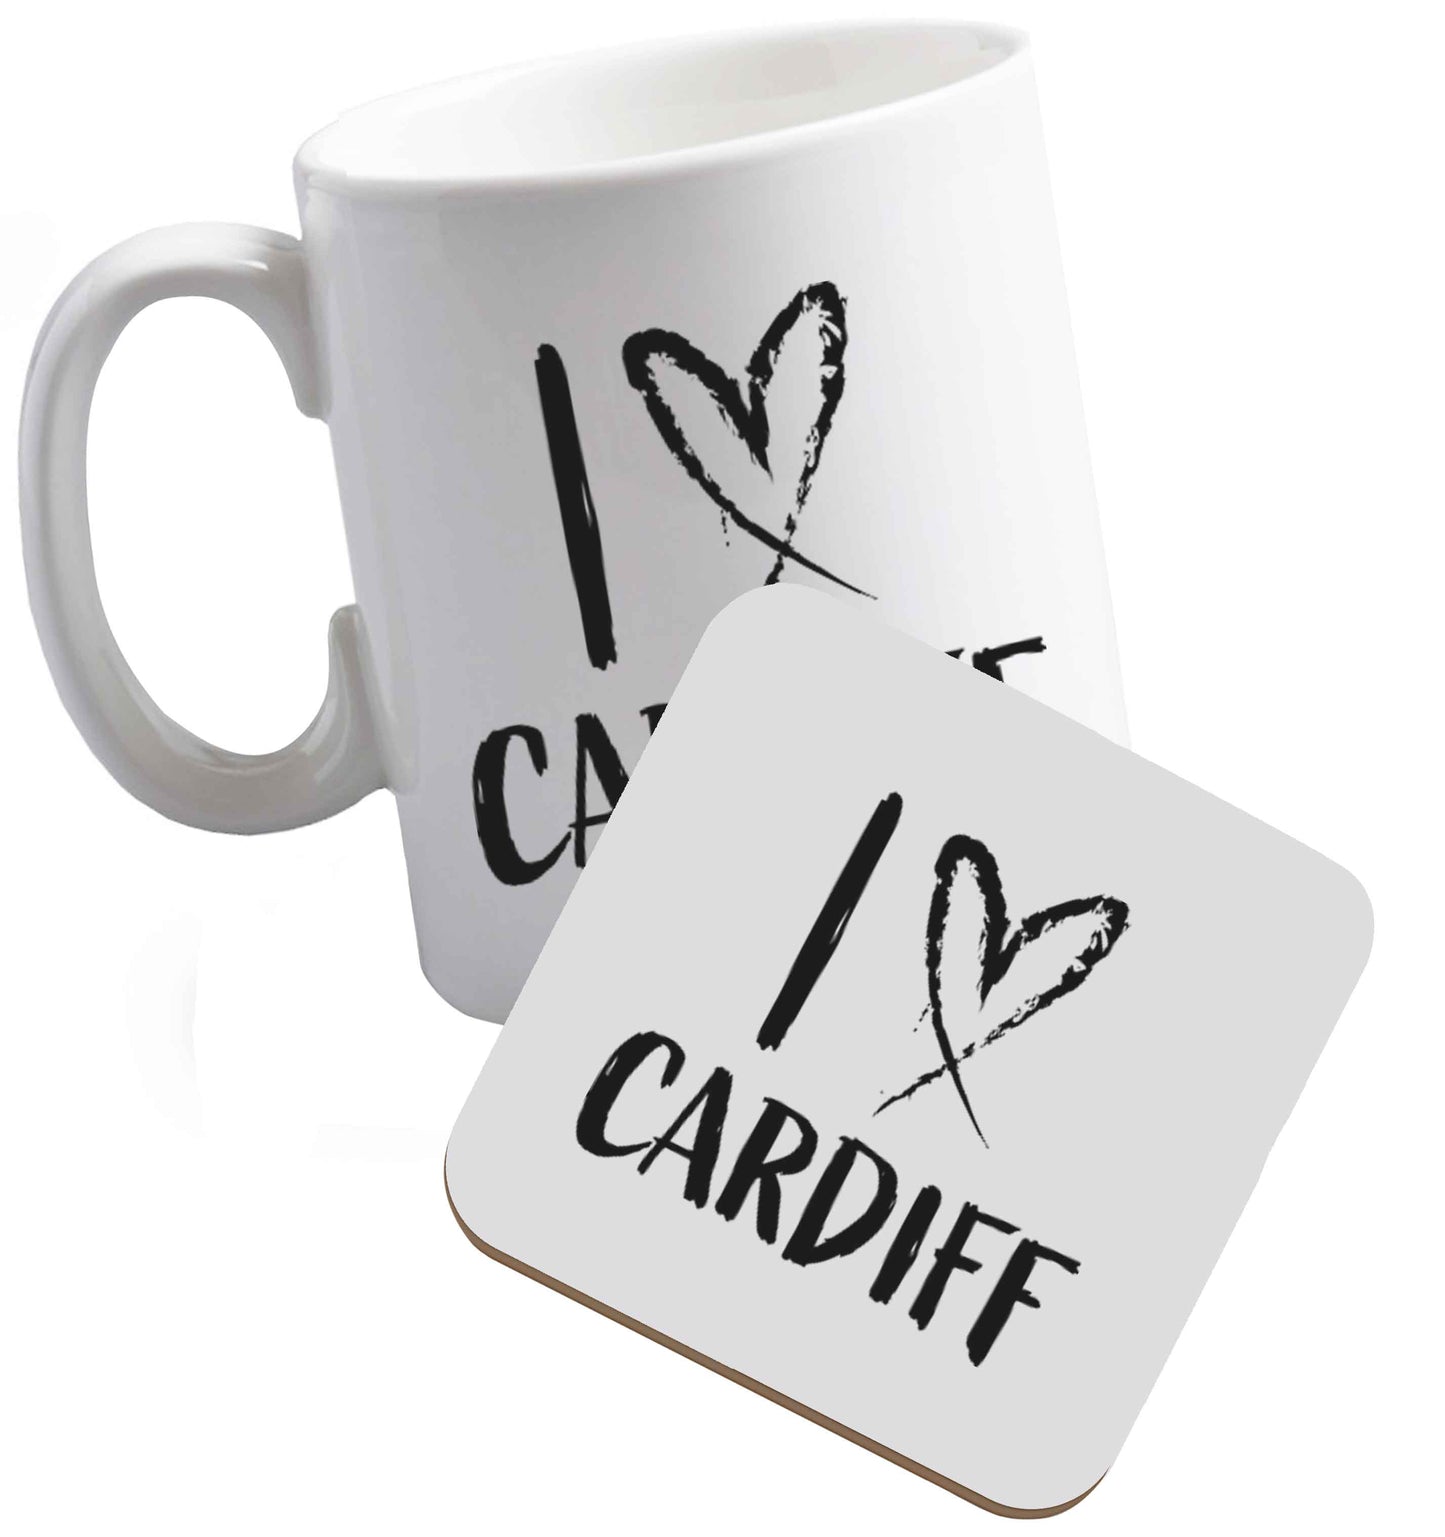 10 oz I love Cardiff ceramic mug and coaster set right handed